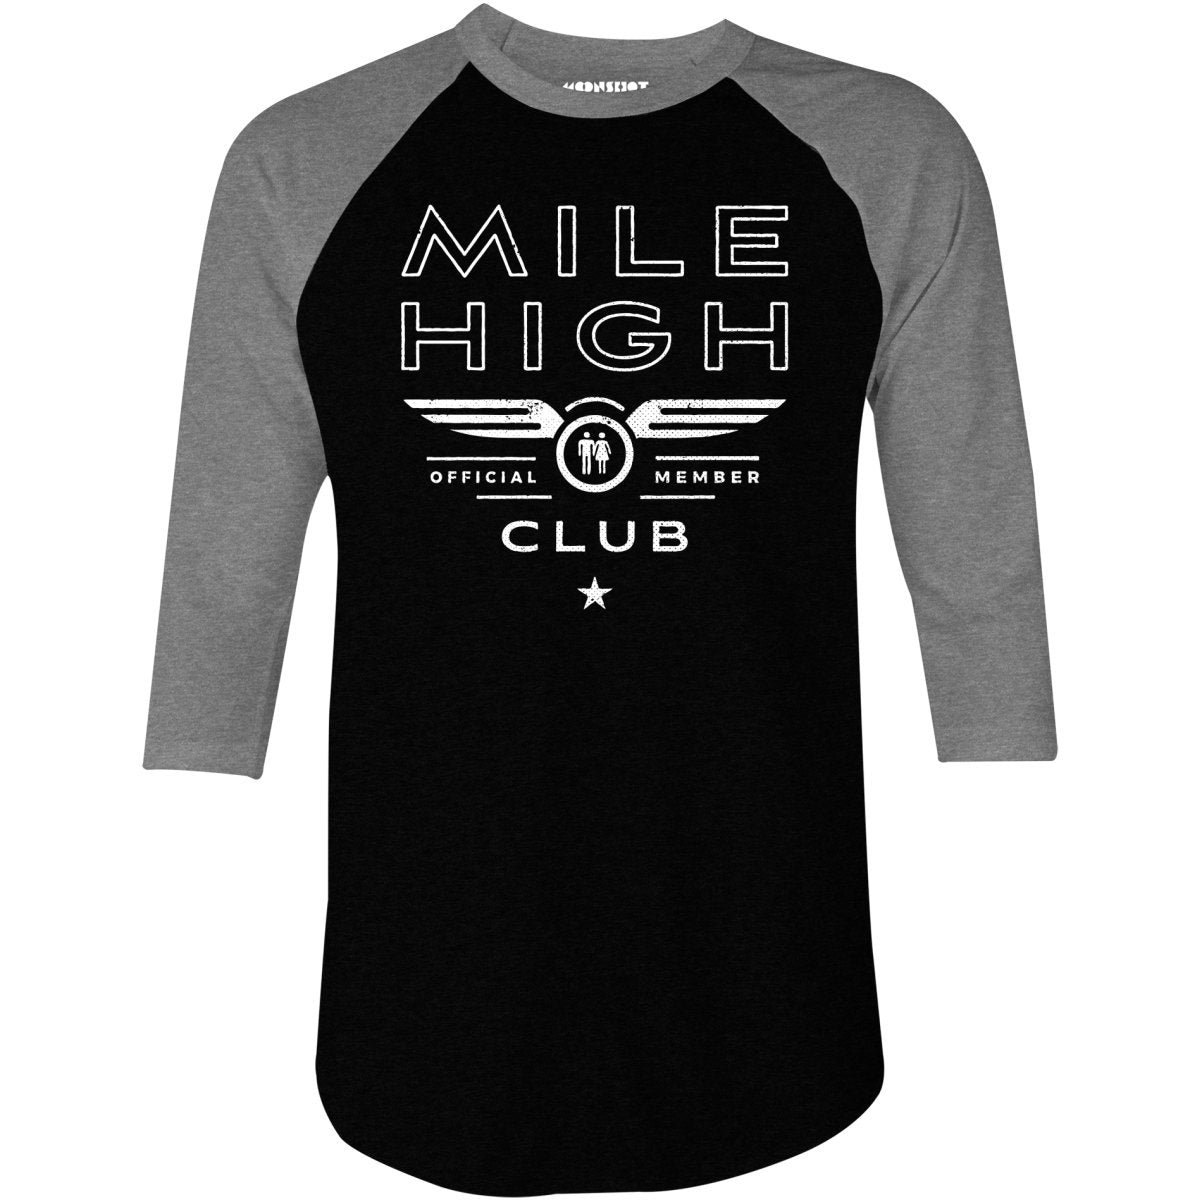 Mile High Club Official Member - 3/4 Sleeve Raglan T-Shirt